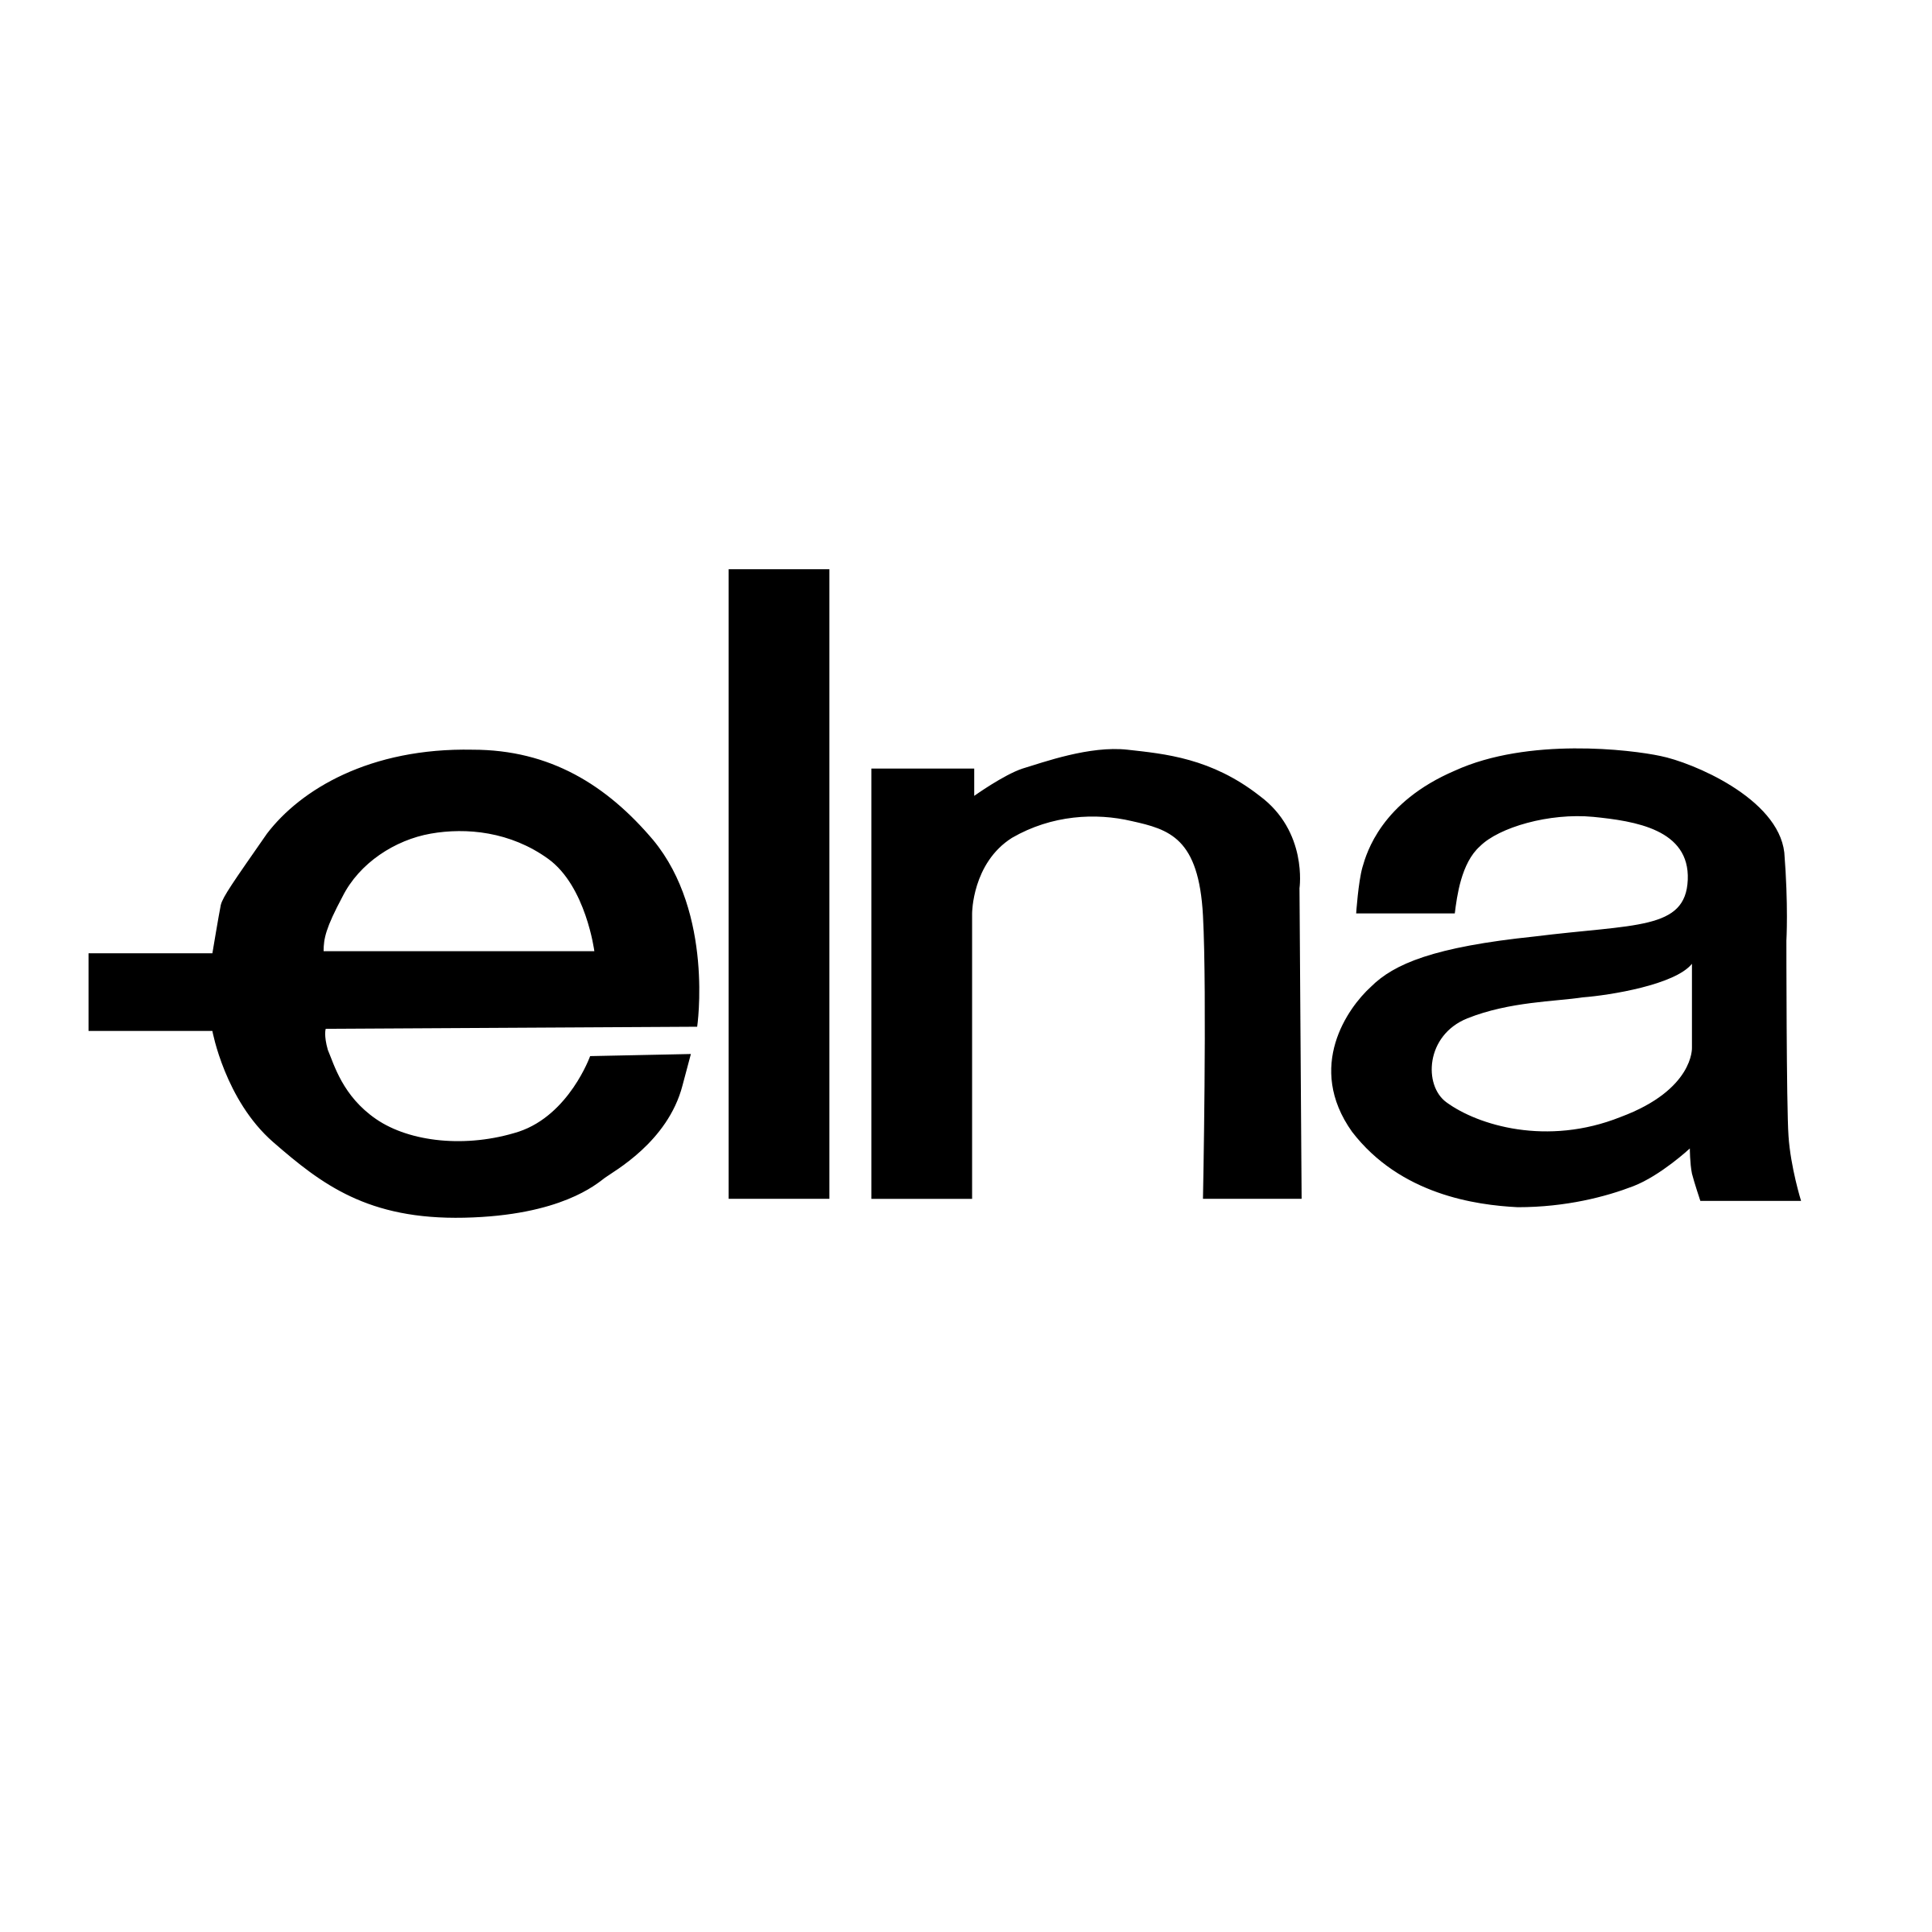 Elna Logo - Elna Logo PNG Transparent & SVG Vector - Freebie Supply